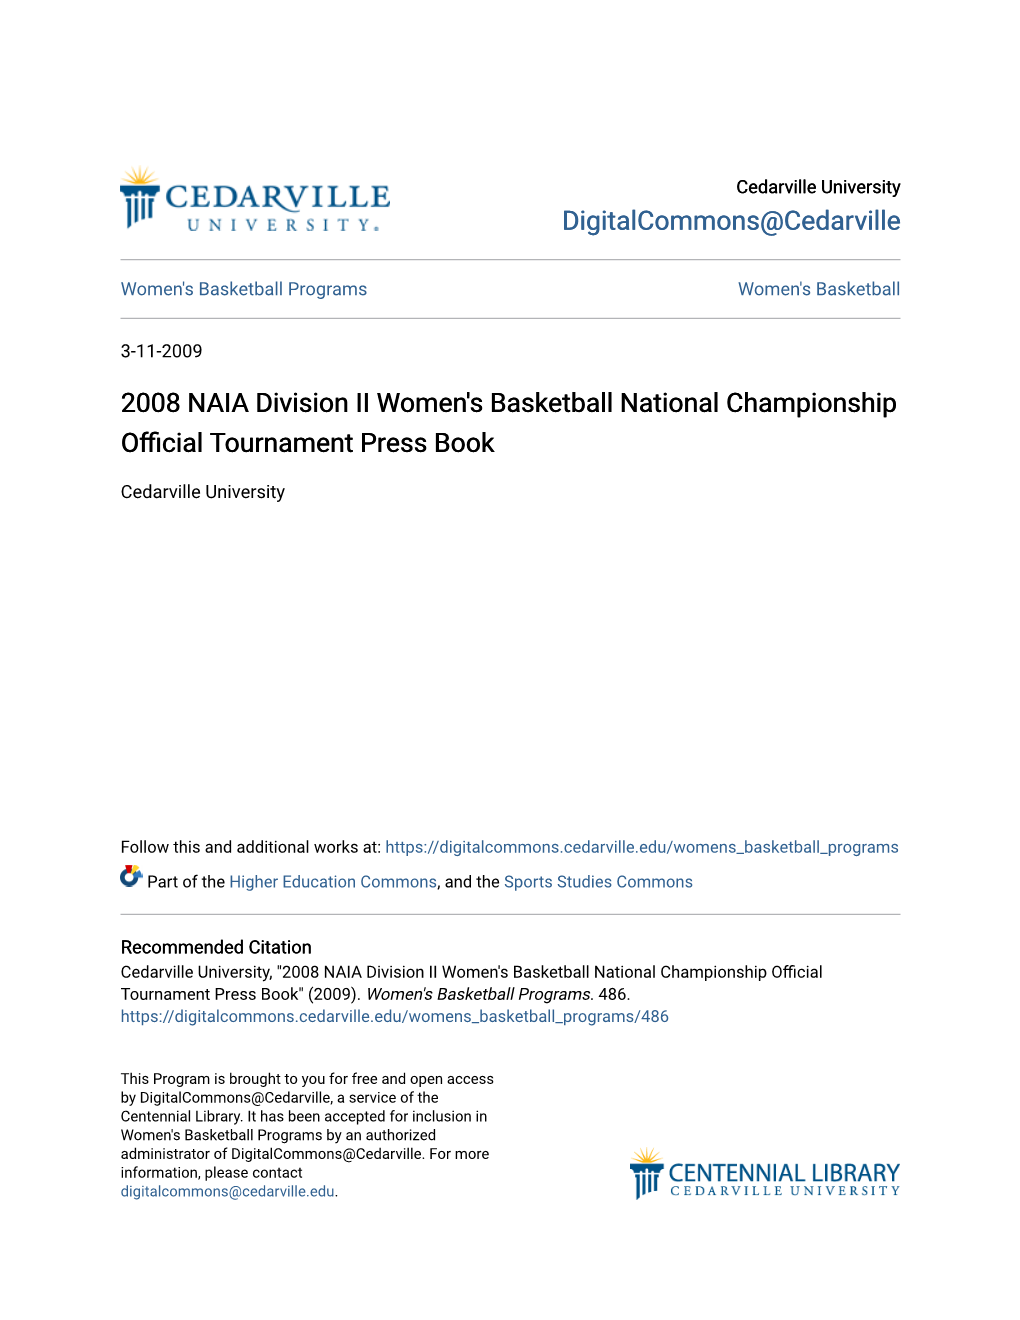 2008 NAIA Division II Women's Basketball National Championship Officialournament T Press Book